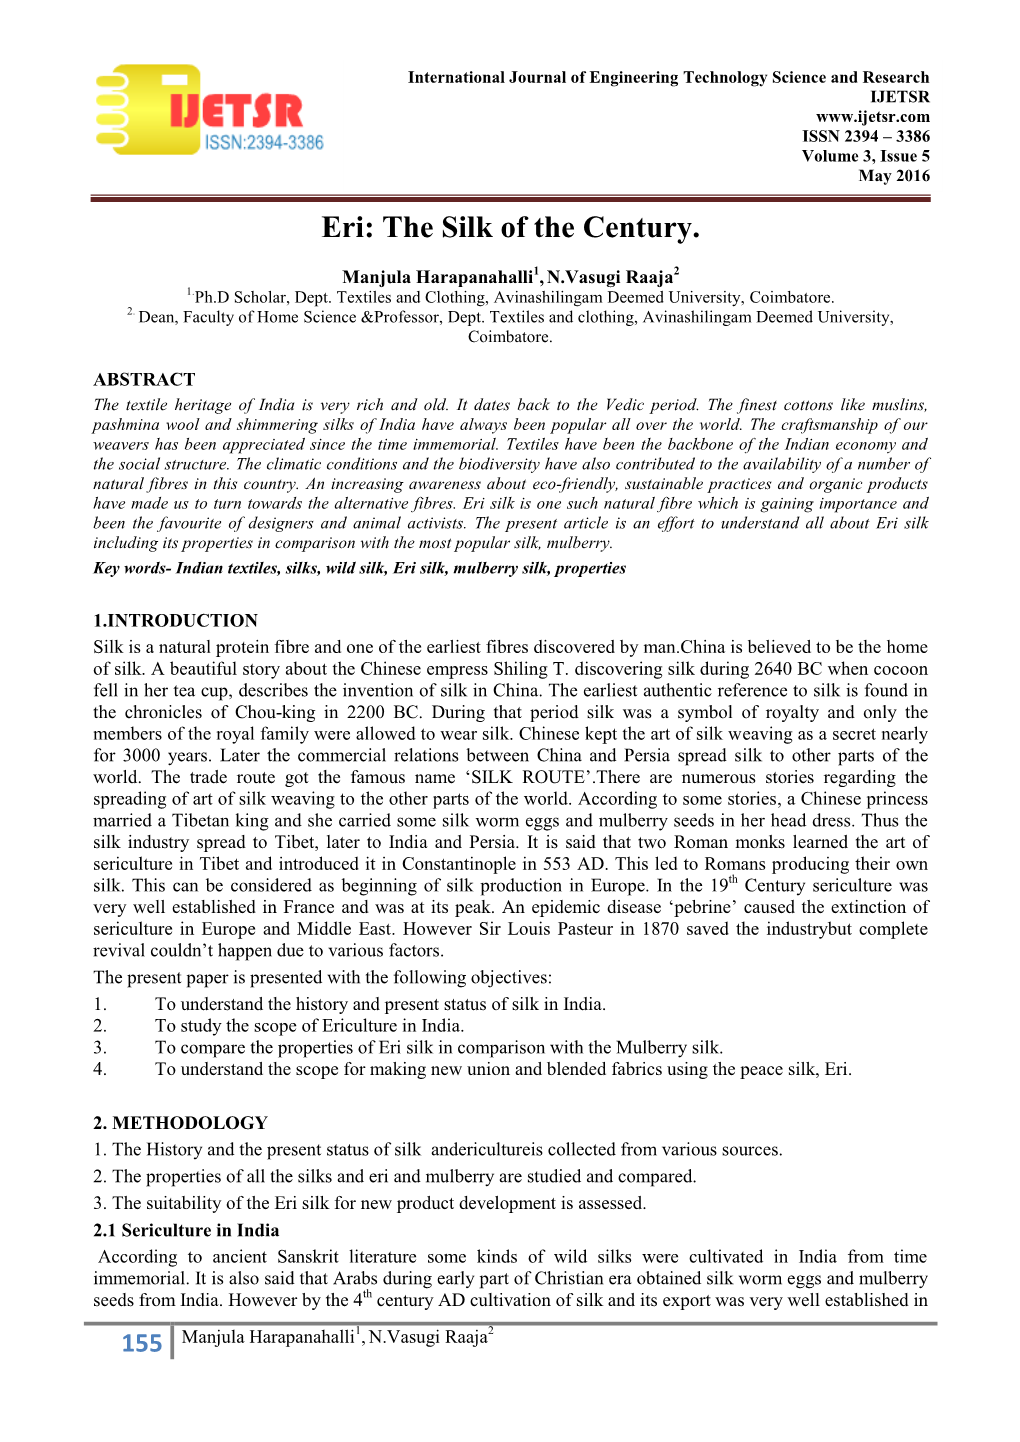 Eri: the Silk of the Century